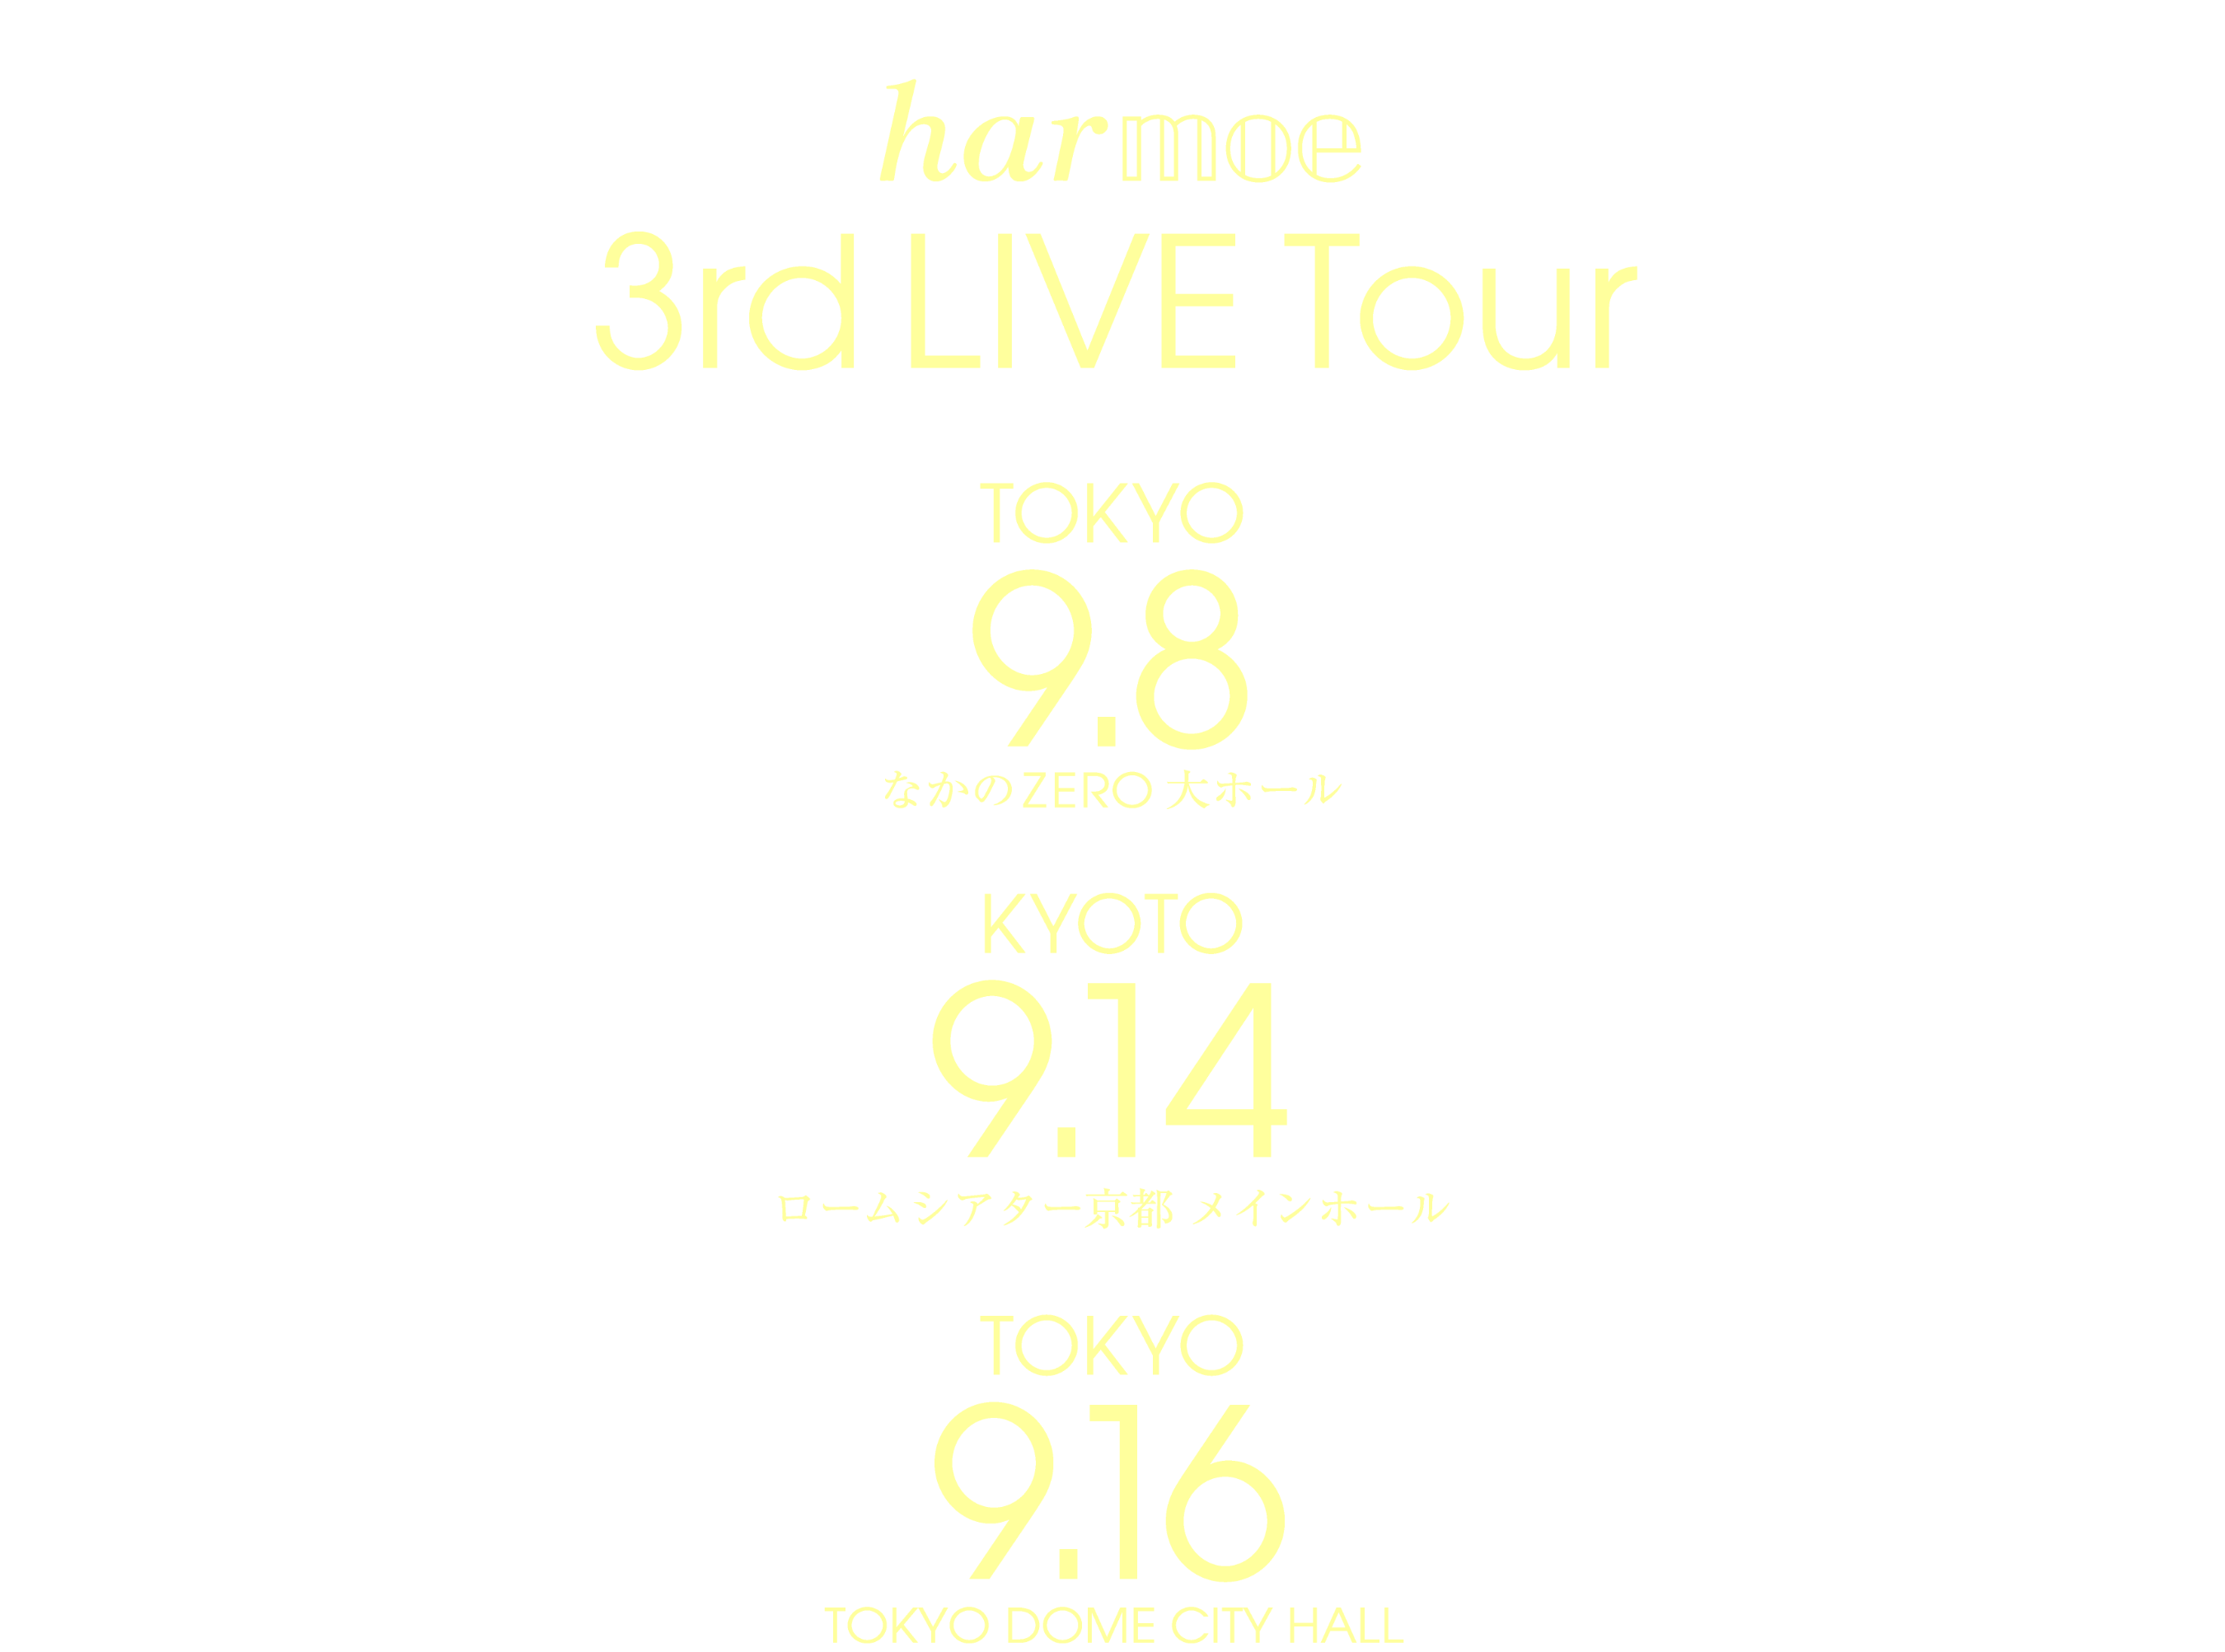 harmoe 3rd LIVE Tour - TOKYO 9.8 なかのZERO 大ホール / KYOTO 9.14 ロームシアター京都 メインホール / TOKYO 9.16 TOKYO DOME CITY HALL